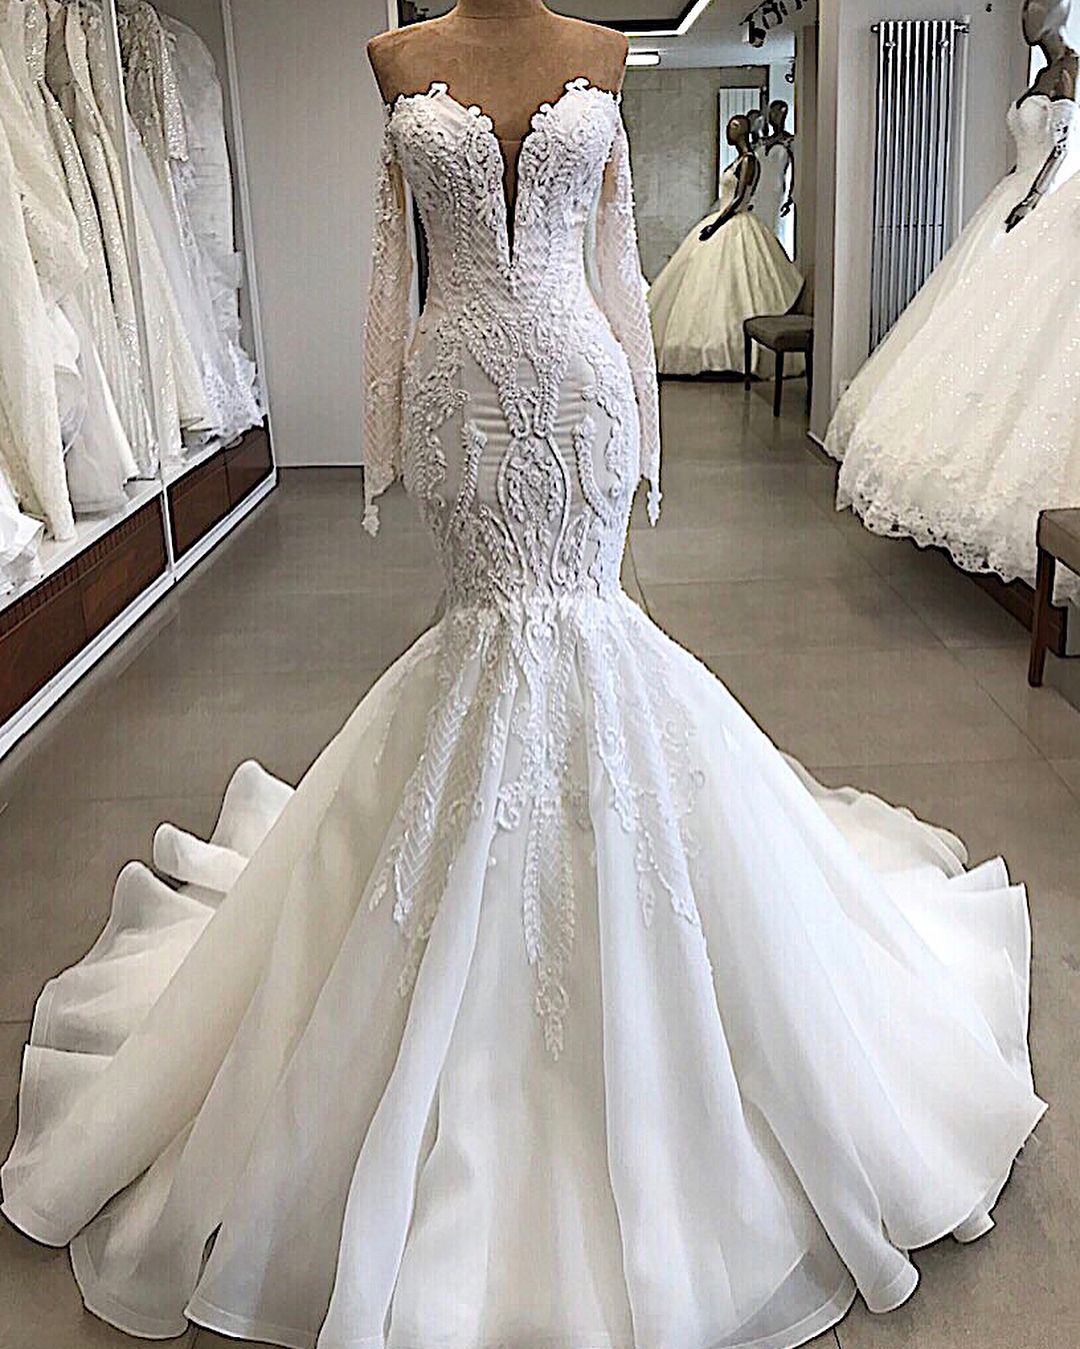 sexy white wedding dress